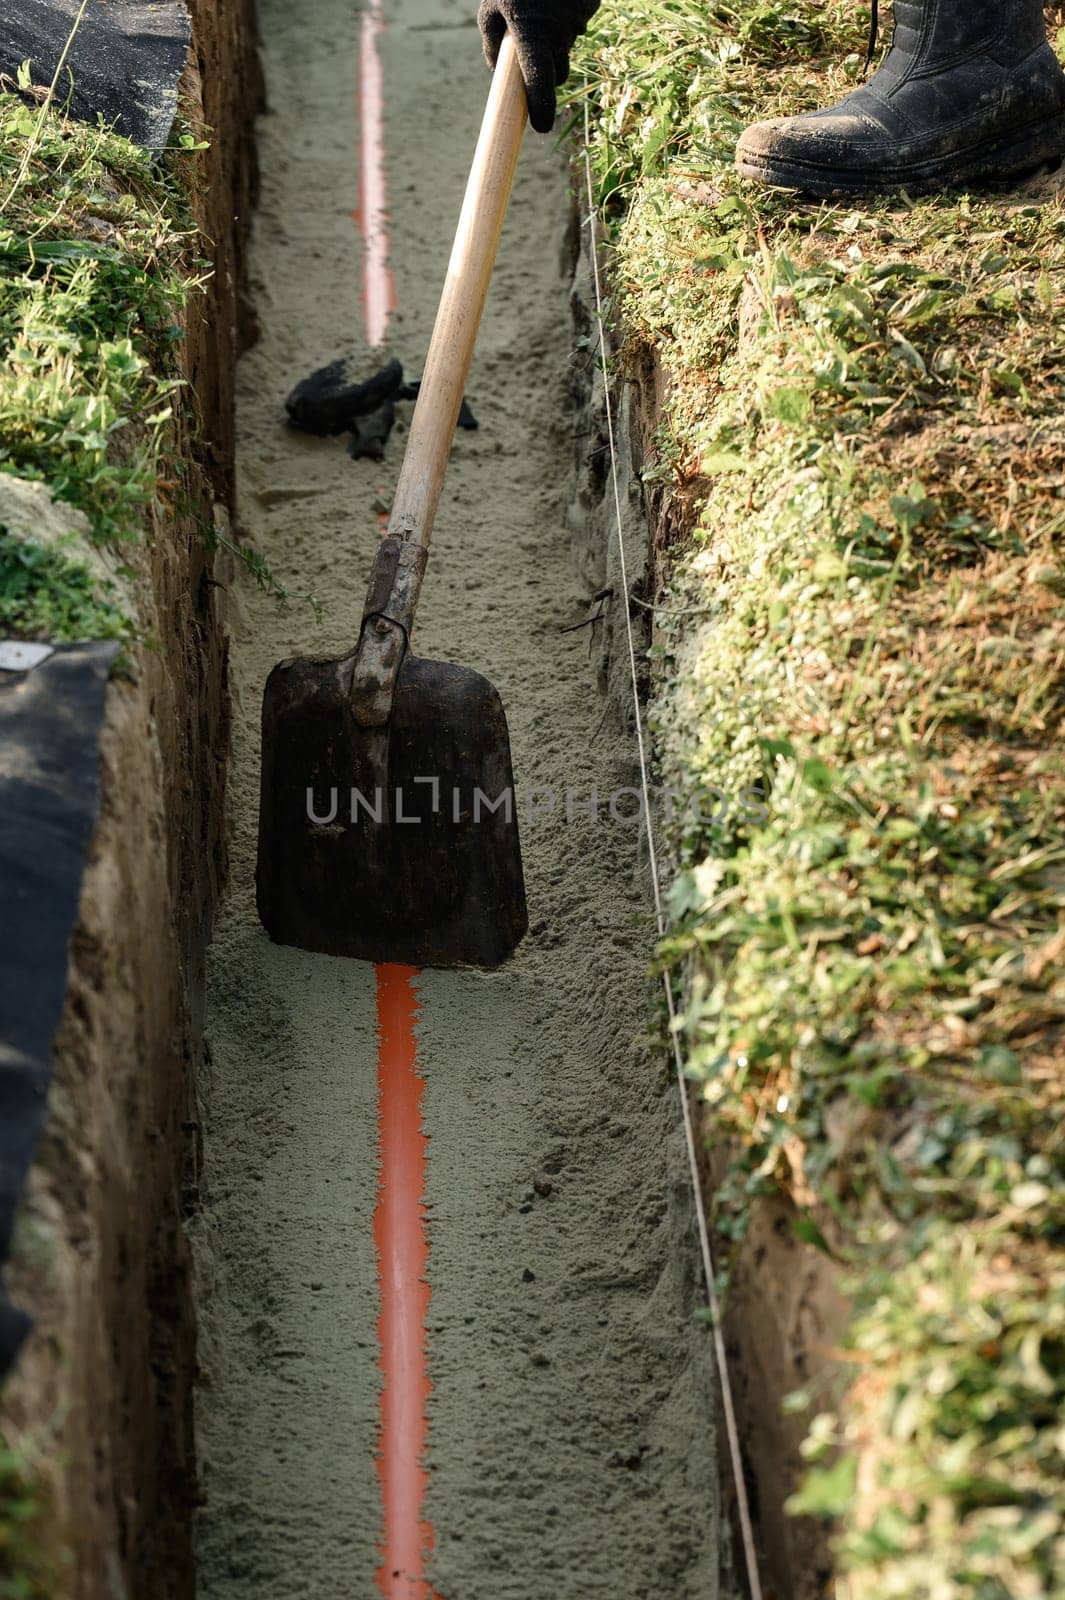 Plumber installs a reinforced orange sewer pipe during site maintenance. by Niko_Cingaryuk